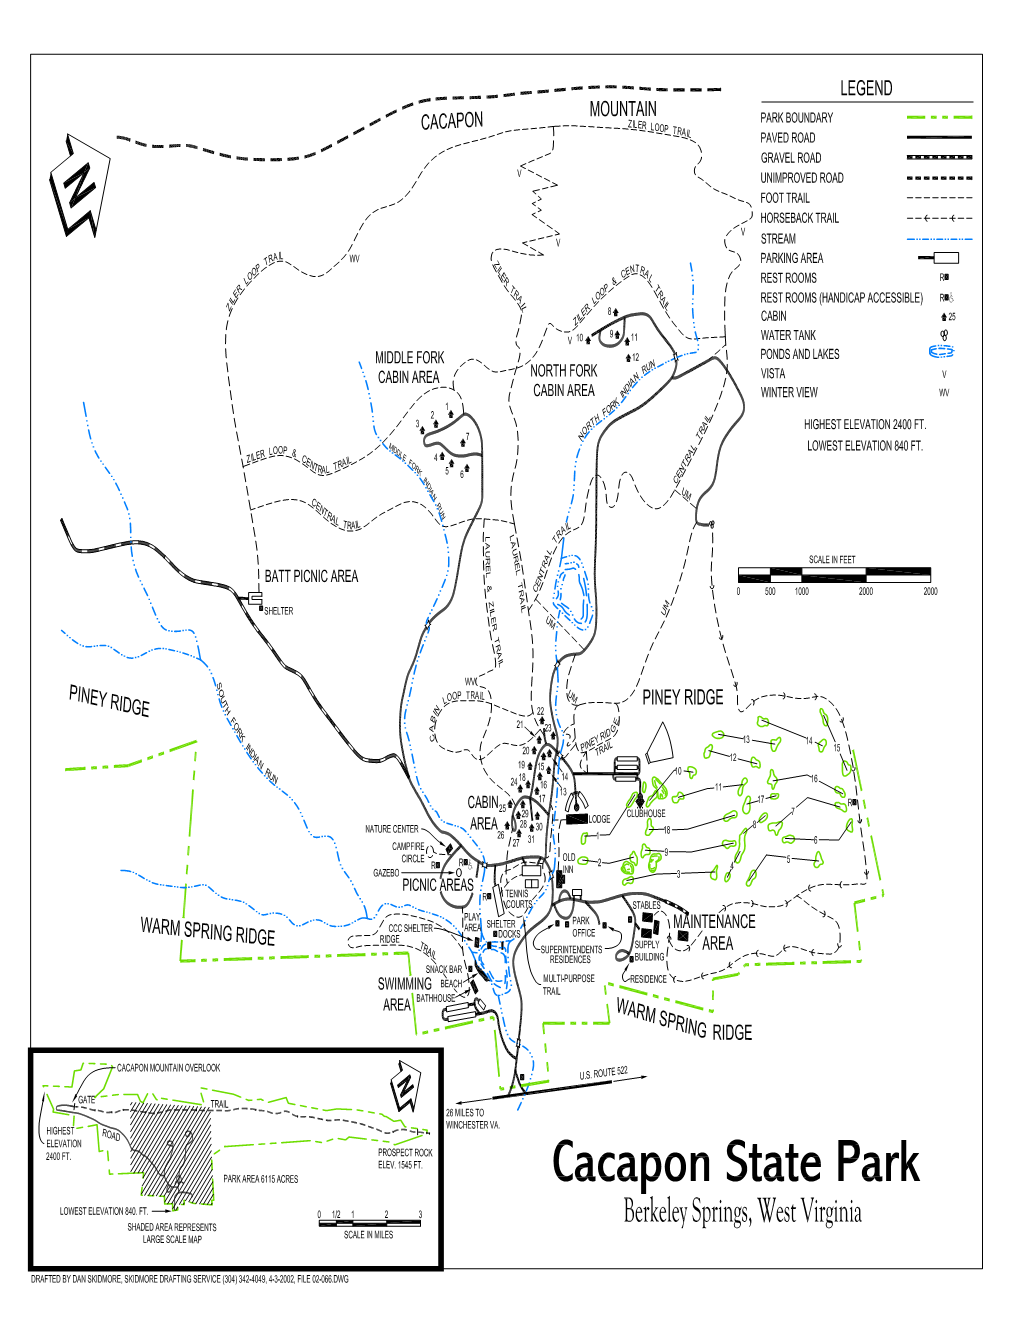 Cacapon Resort State Park - Berkeley Springs, West Virginia